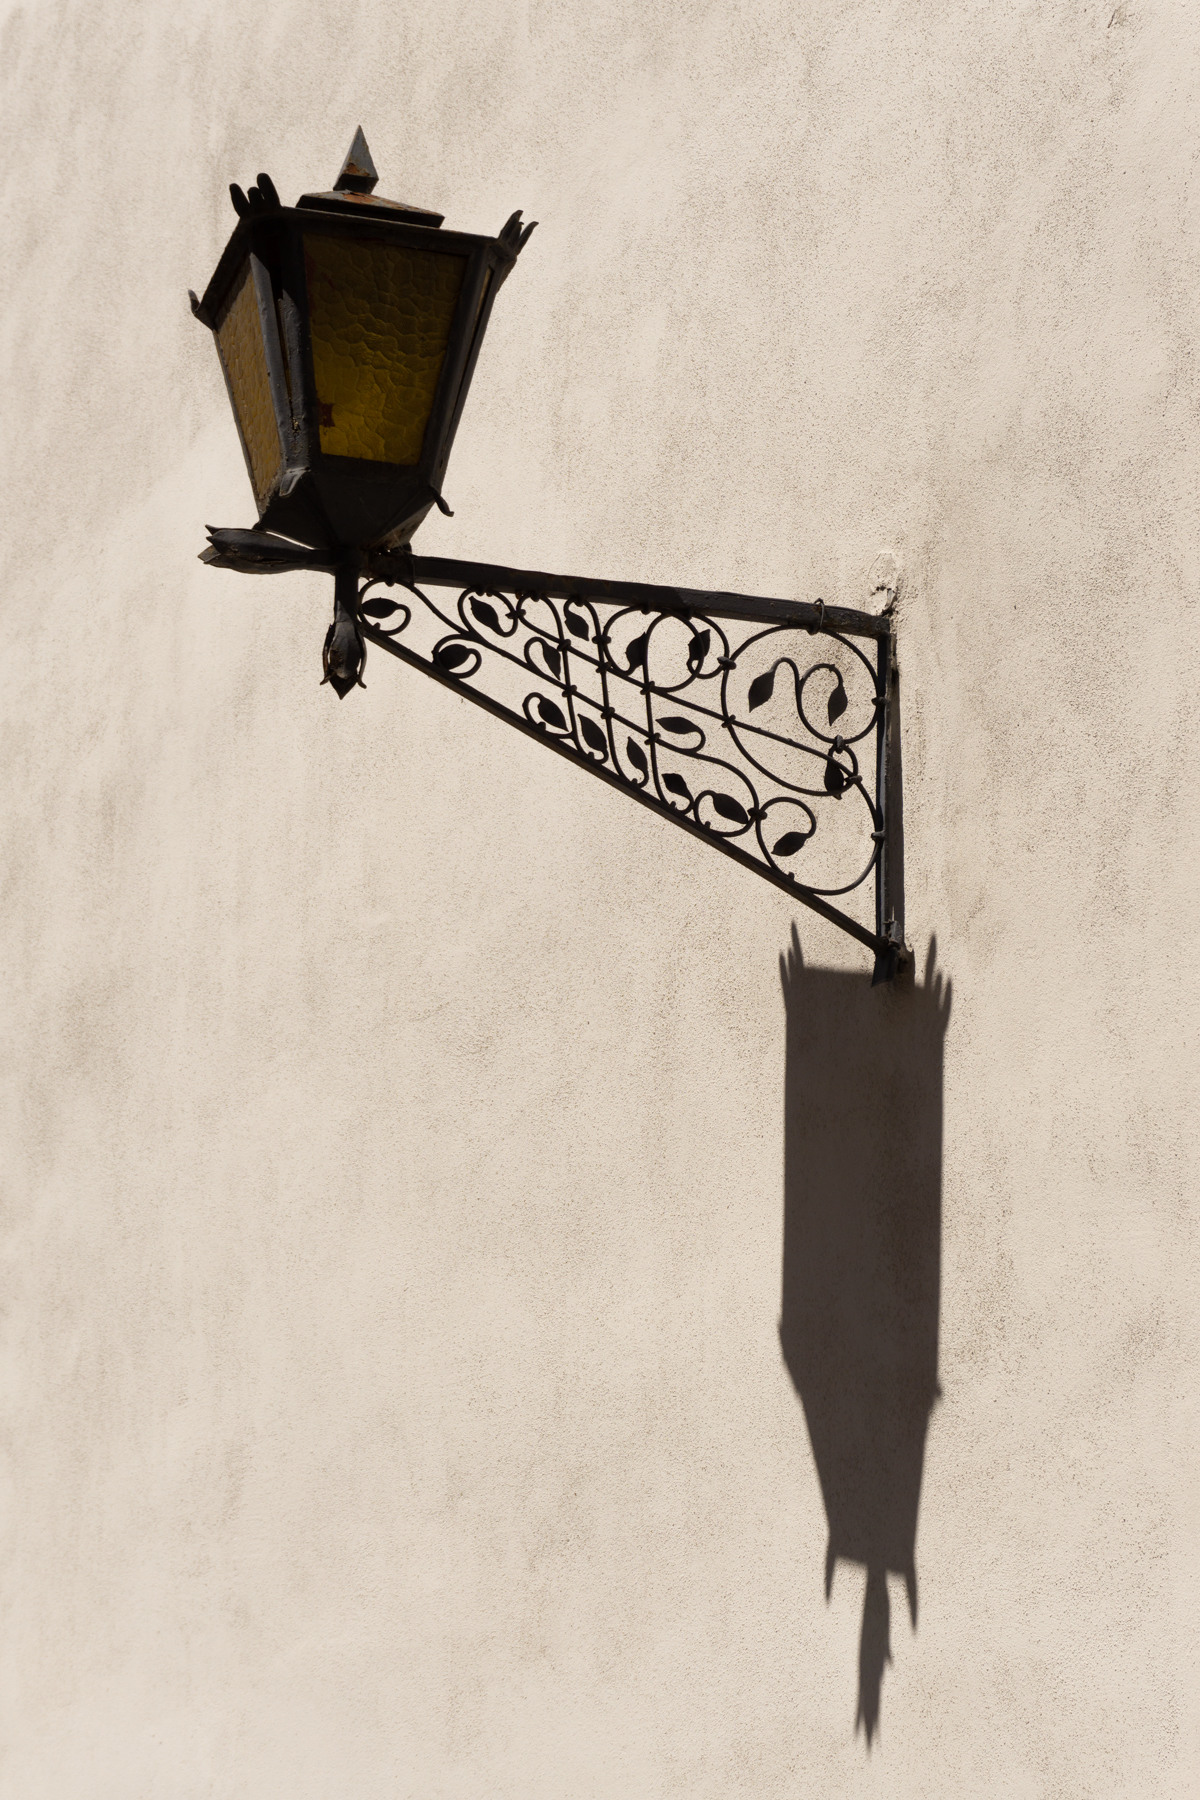 Shadows and Light ~ Summer in Beige, European Travel Snapshot | RG Daily Blog, Copyright © Rebecca Goddard